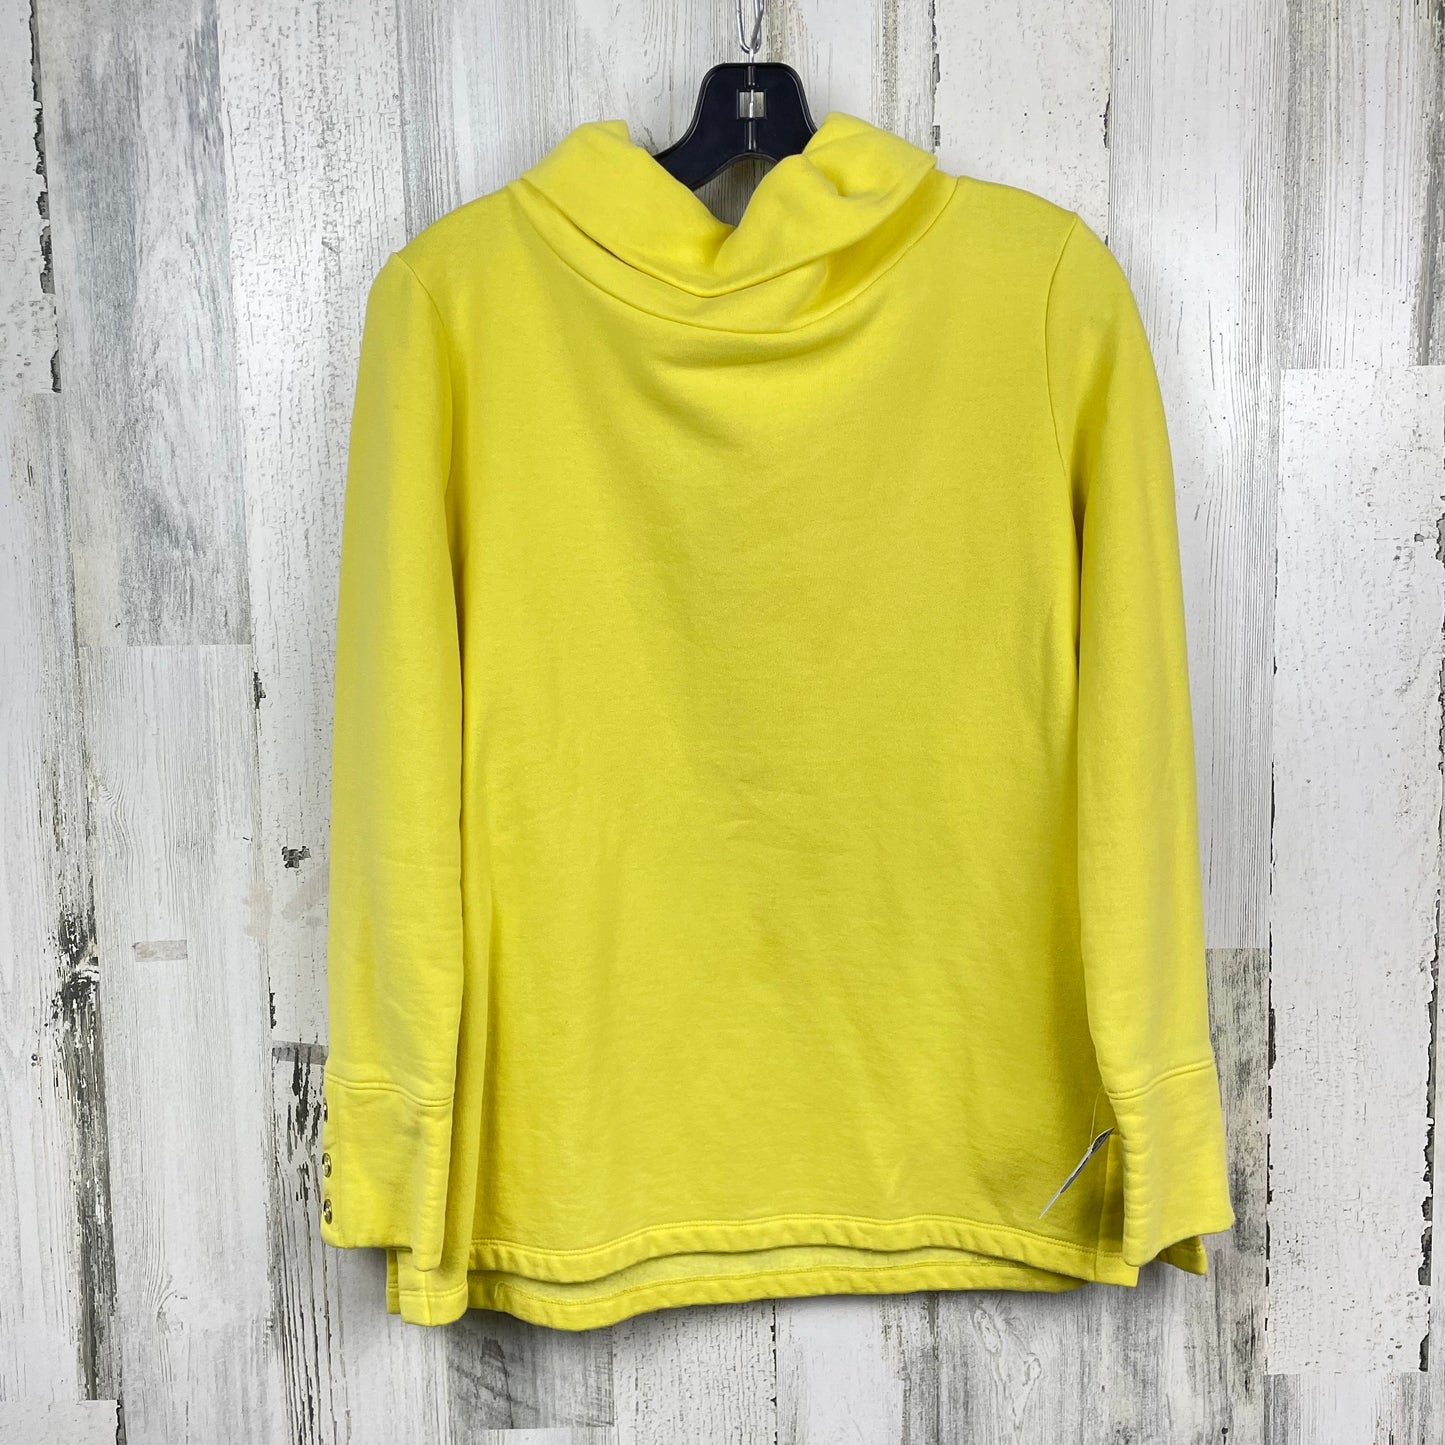 Sweatshirt Crewneck By Talbots  Size: M